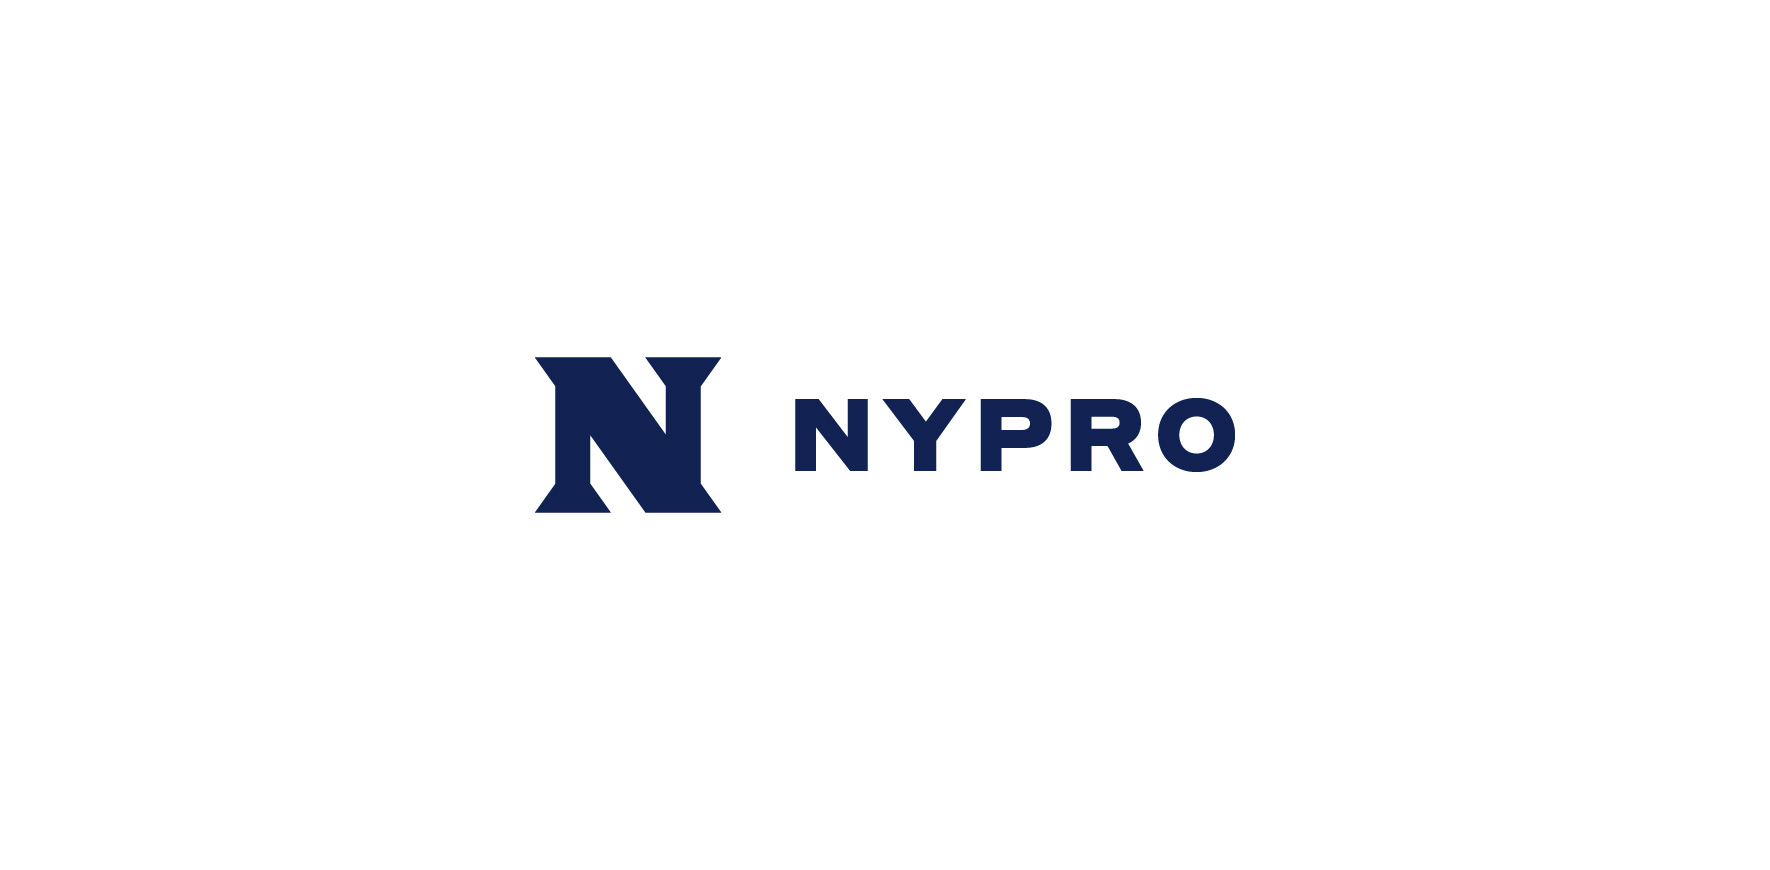 Nypro Branding